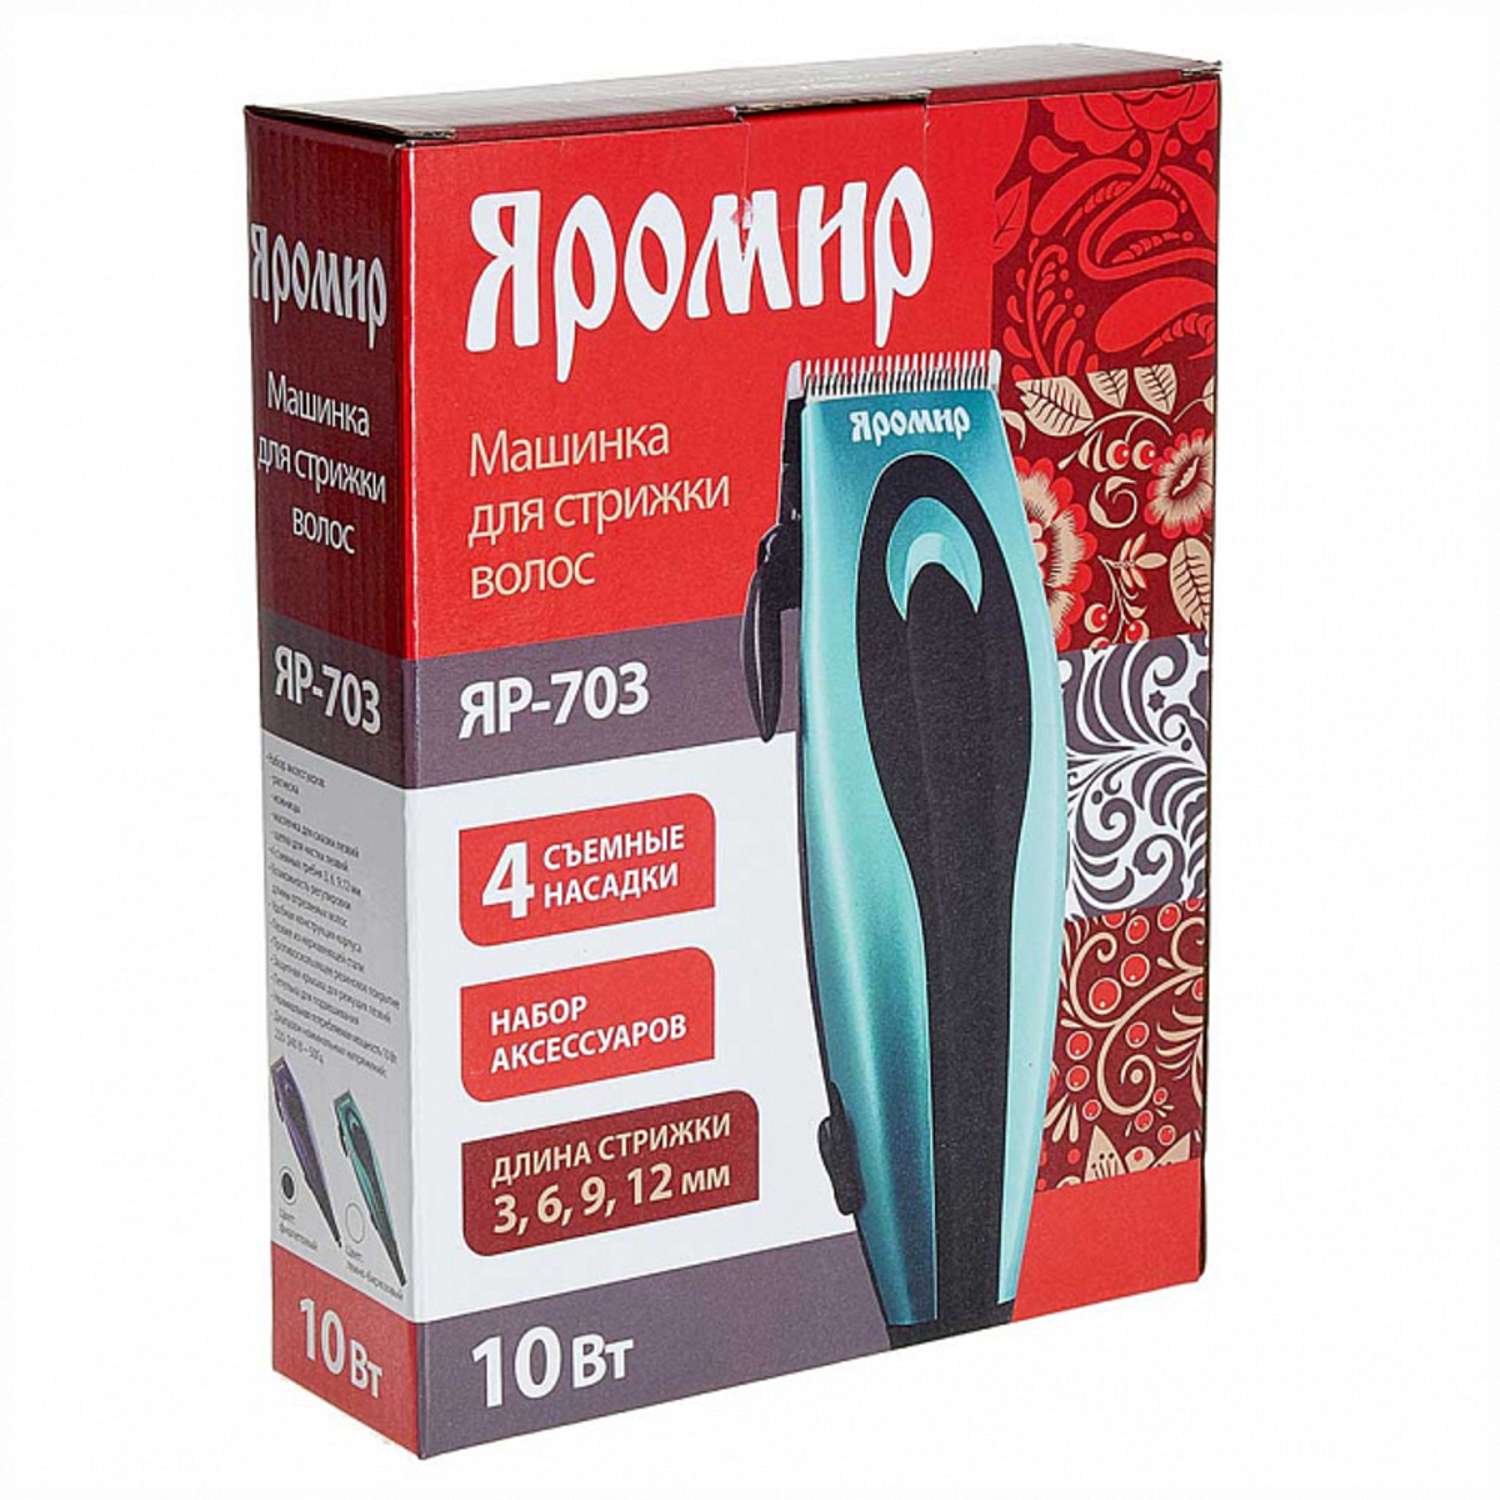 Машинка для стрижки волос Яромир ЯР-703 темно-бирюзовый 10Вт 4 съемных гребня - фото 2